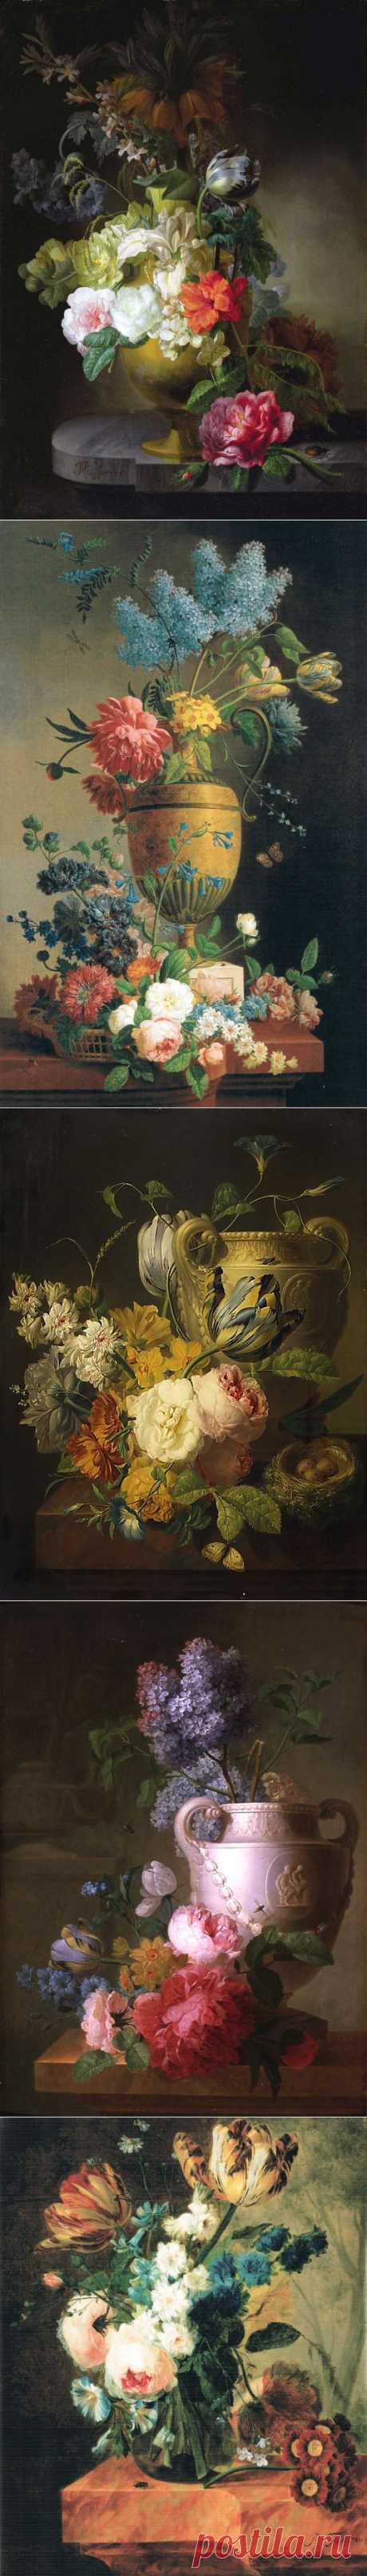 Фламандский мастер цветочного натюрморта Peter Faes (1750 - 1814).